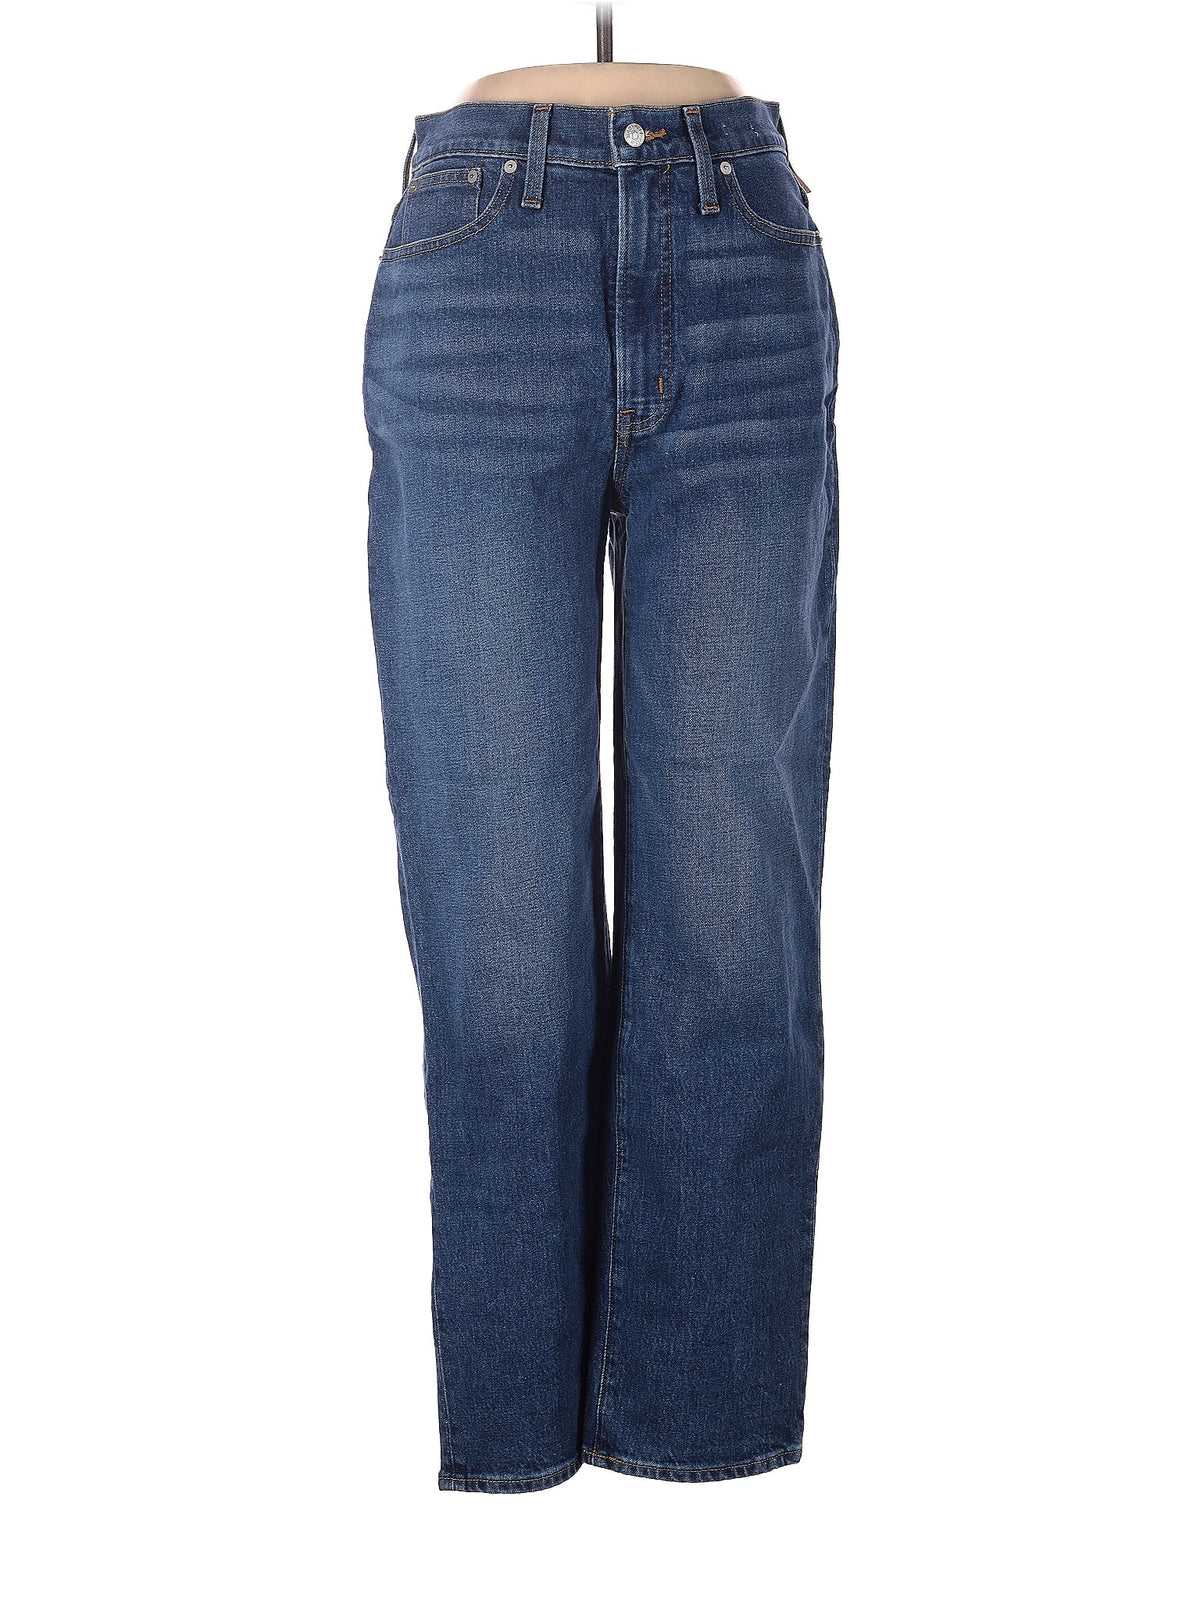 High-Rise Jeans in Medium Wash waist size - 28